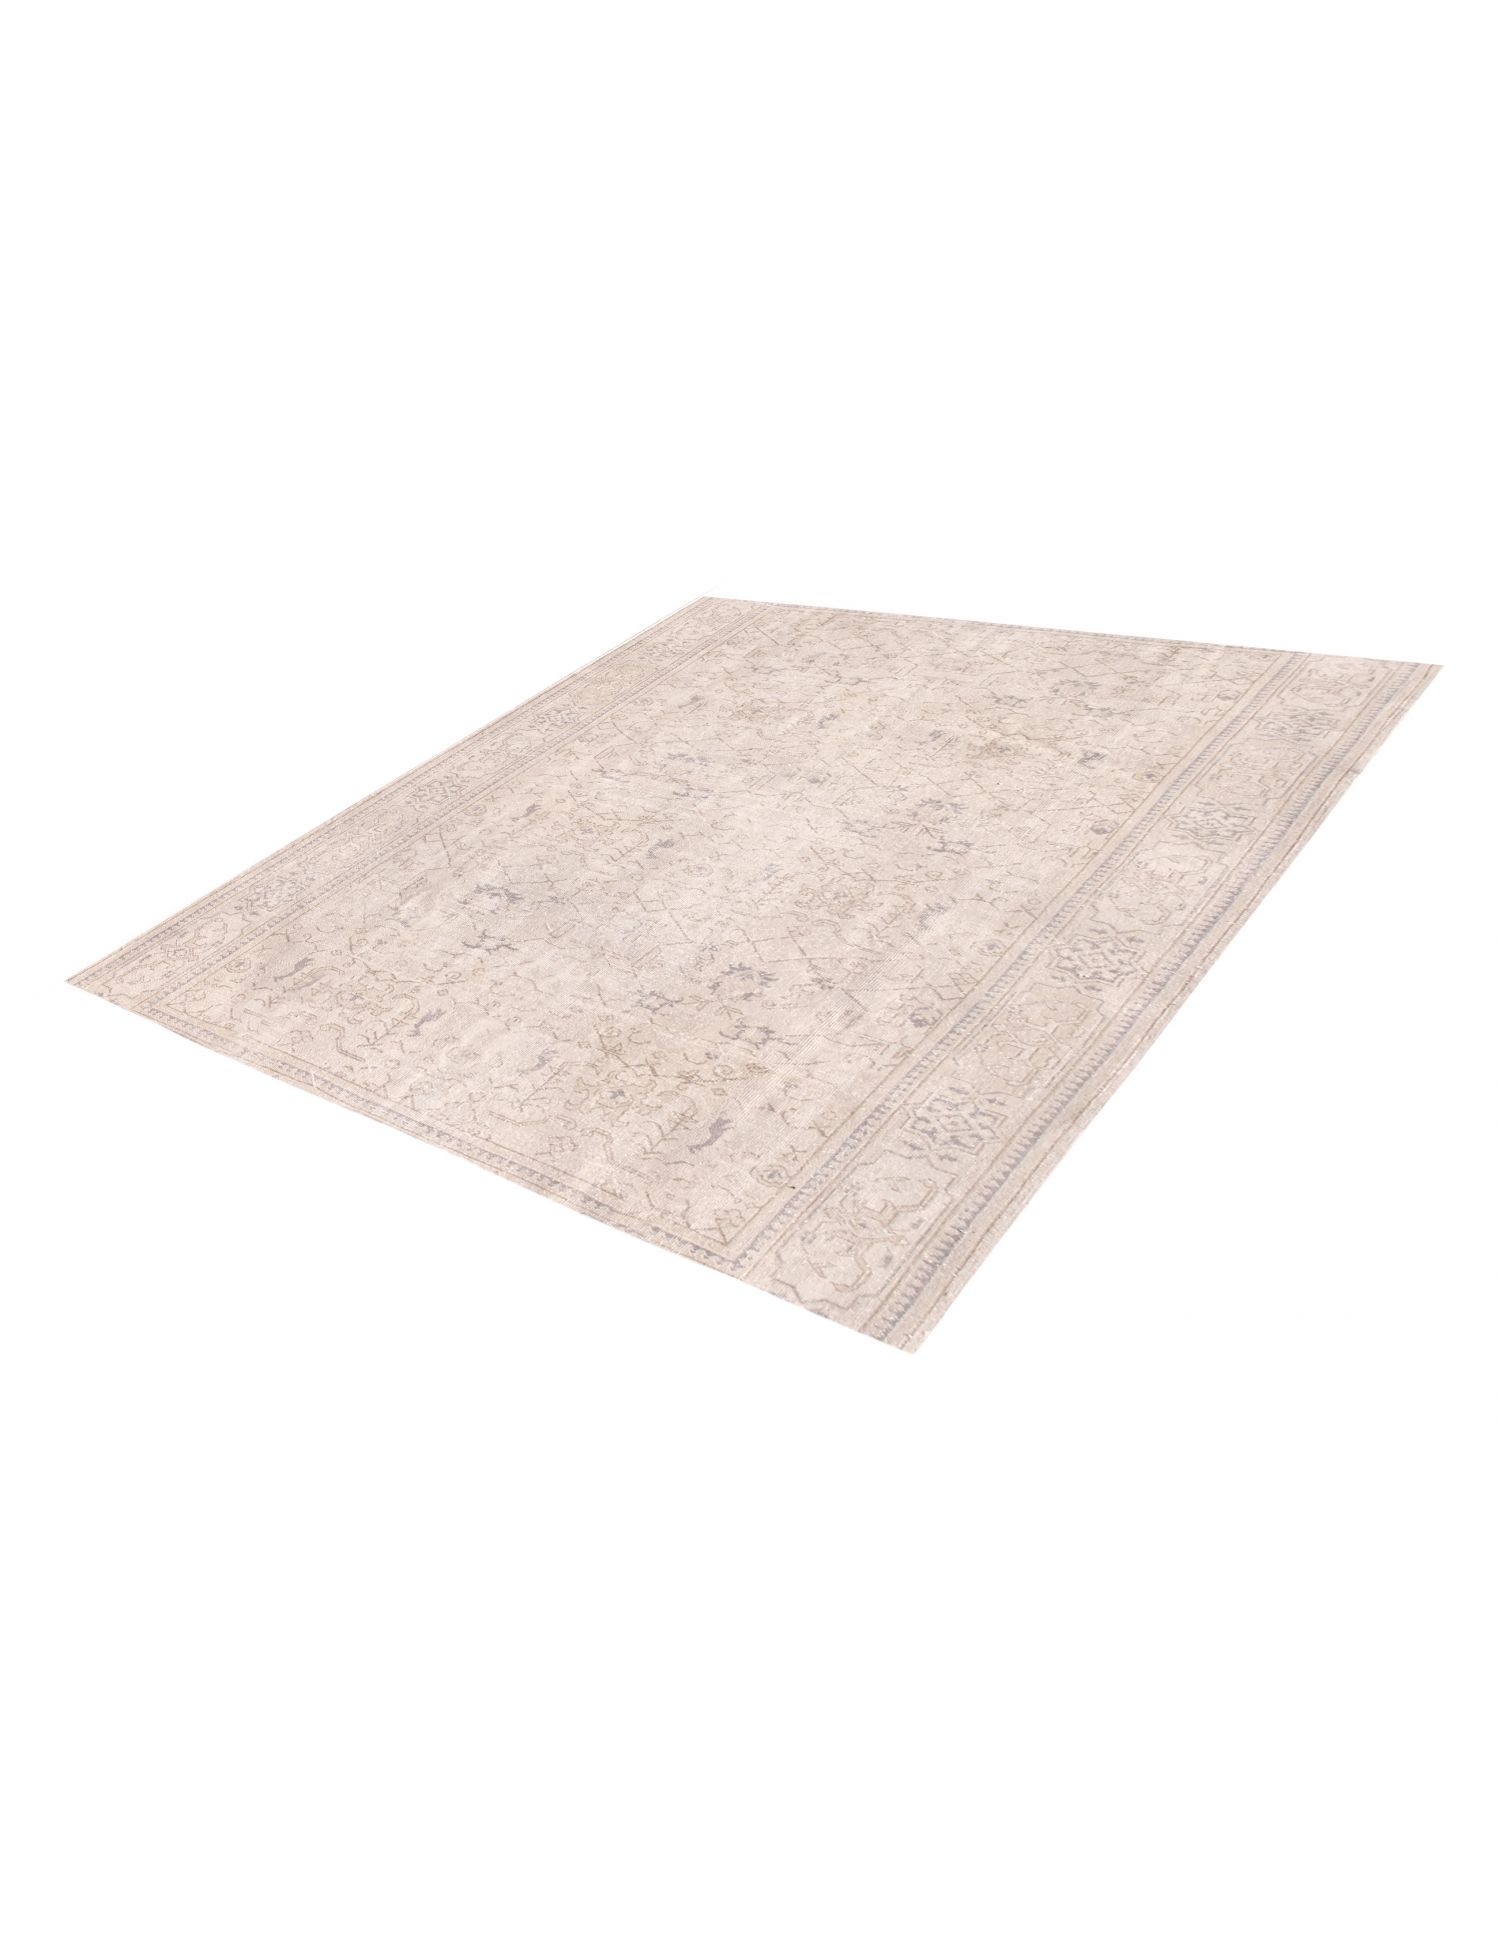 Quadrat Vintage Teppich  beige <br/>220 x 220 cm